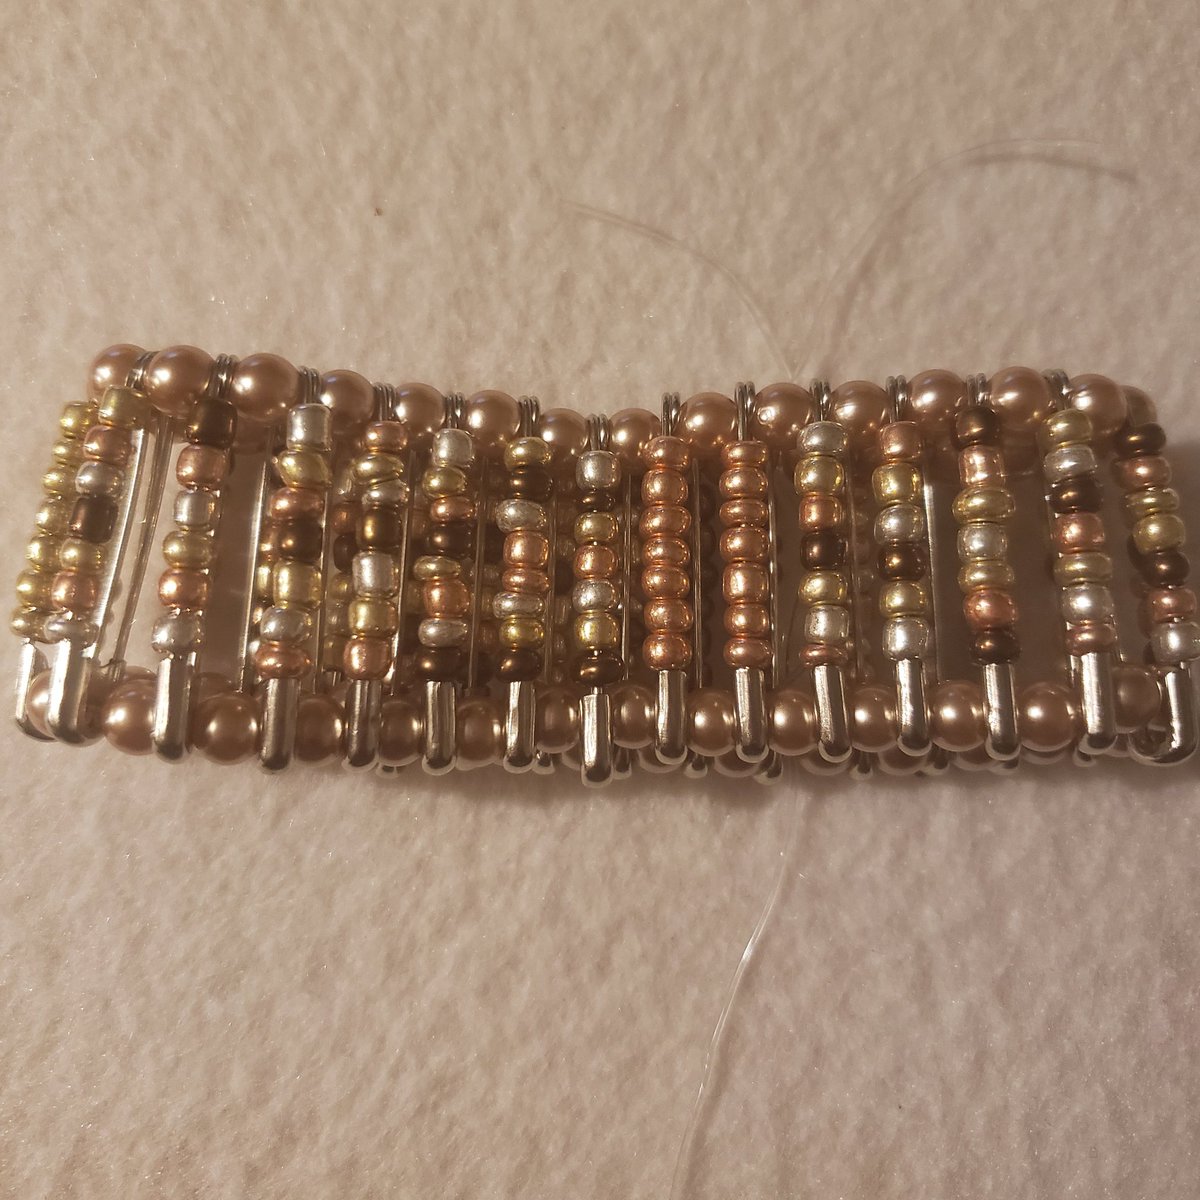 #safetypin #safetypinjewelry #bead #bracelet #seedbeads #stretchjewelry #stretchbracelet #jewelry #beadstringing #beadjewelry